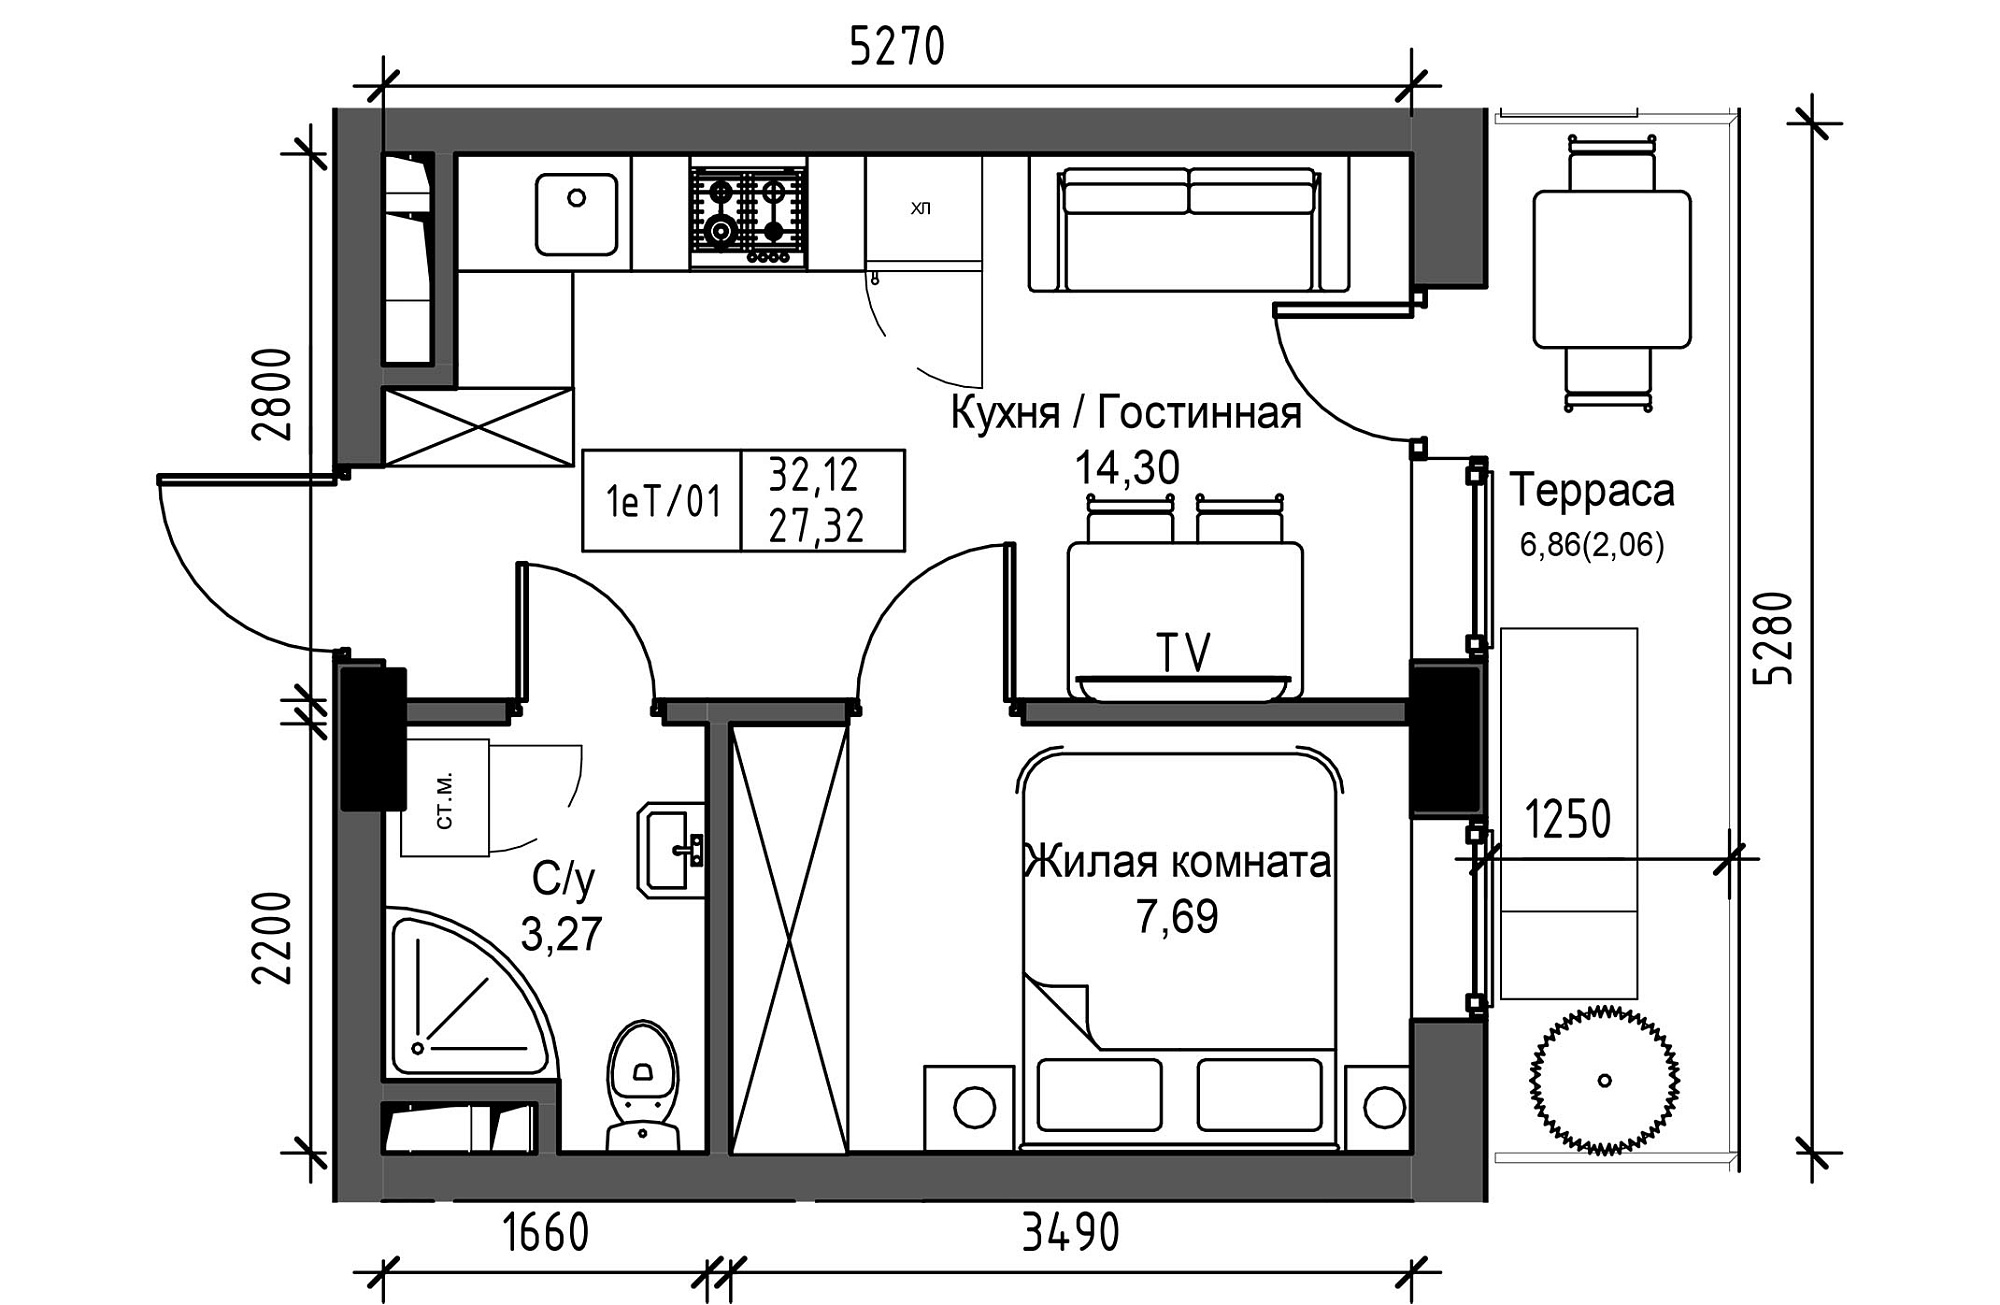 Планування 1-к квартира площею 27.32м2, UM-003-06/0054.